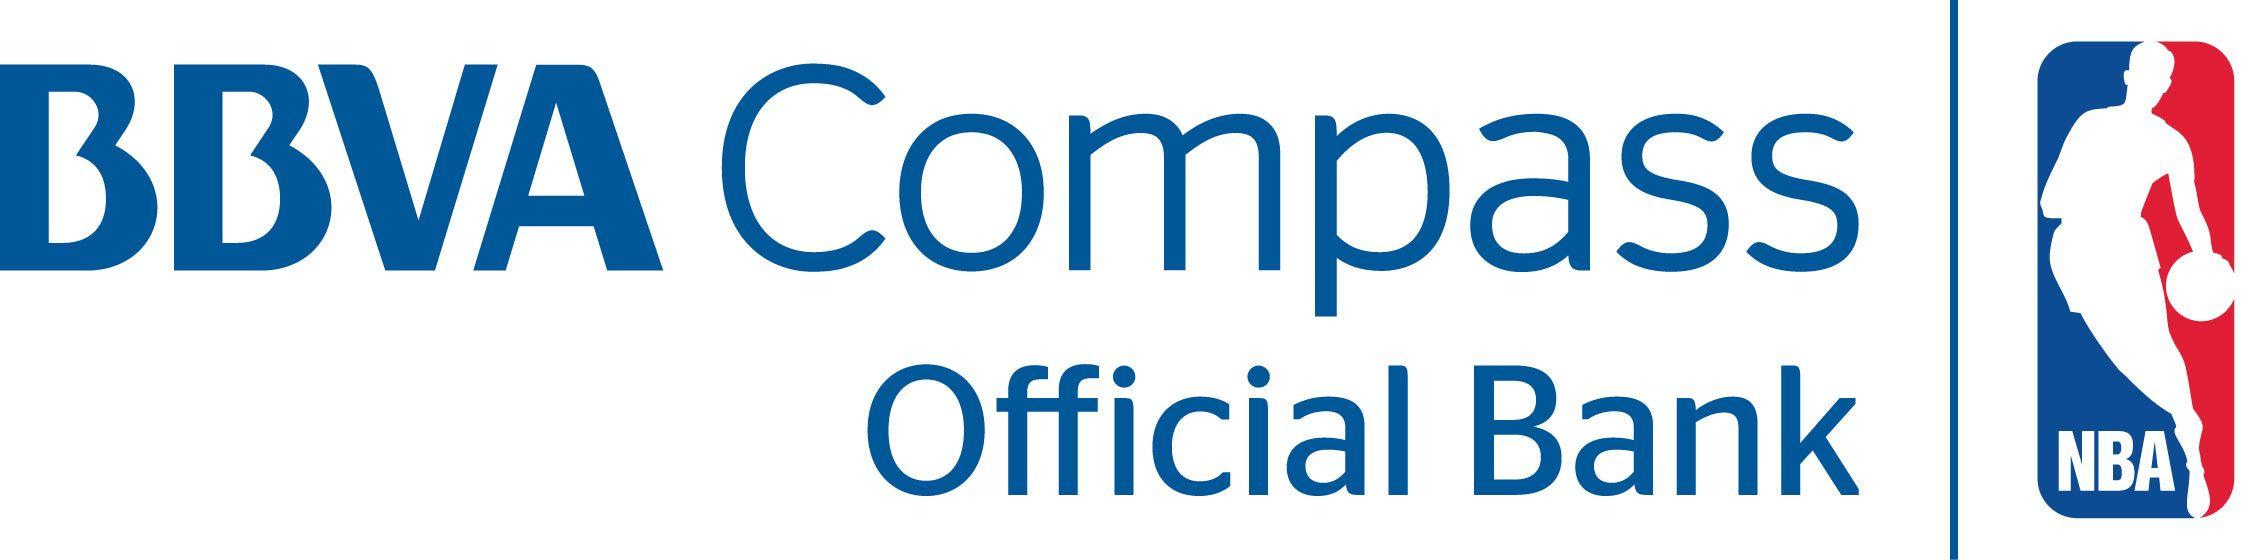 BBVA Compass Logo - BBVA Compass - Correspondent Banking